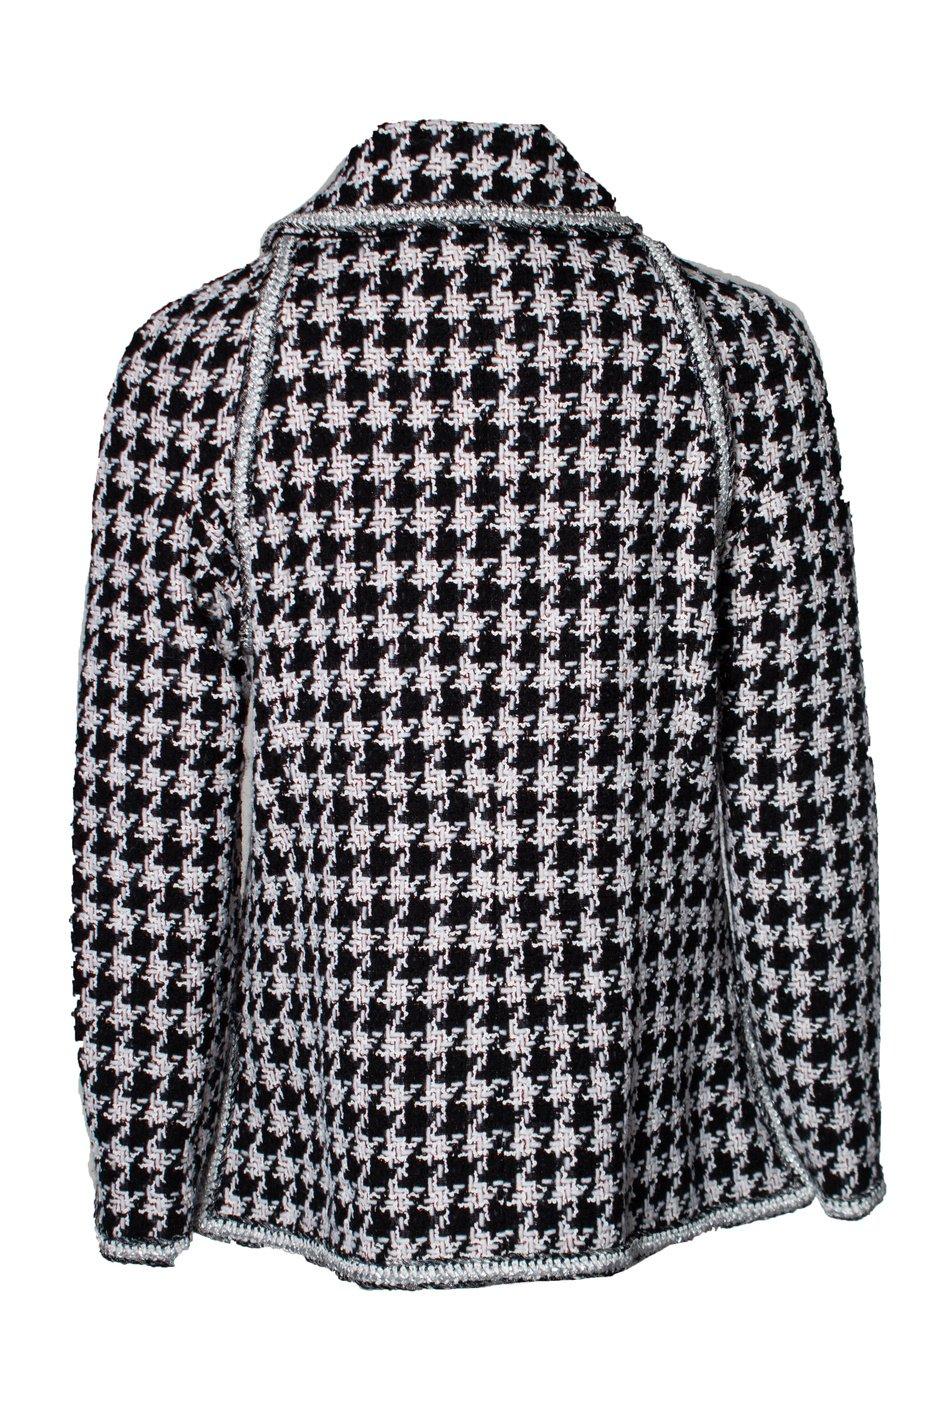 Chanel New Black Houndstooth Tweed Jacket For Sale 2